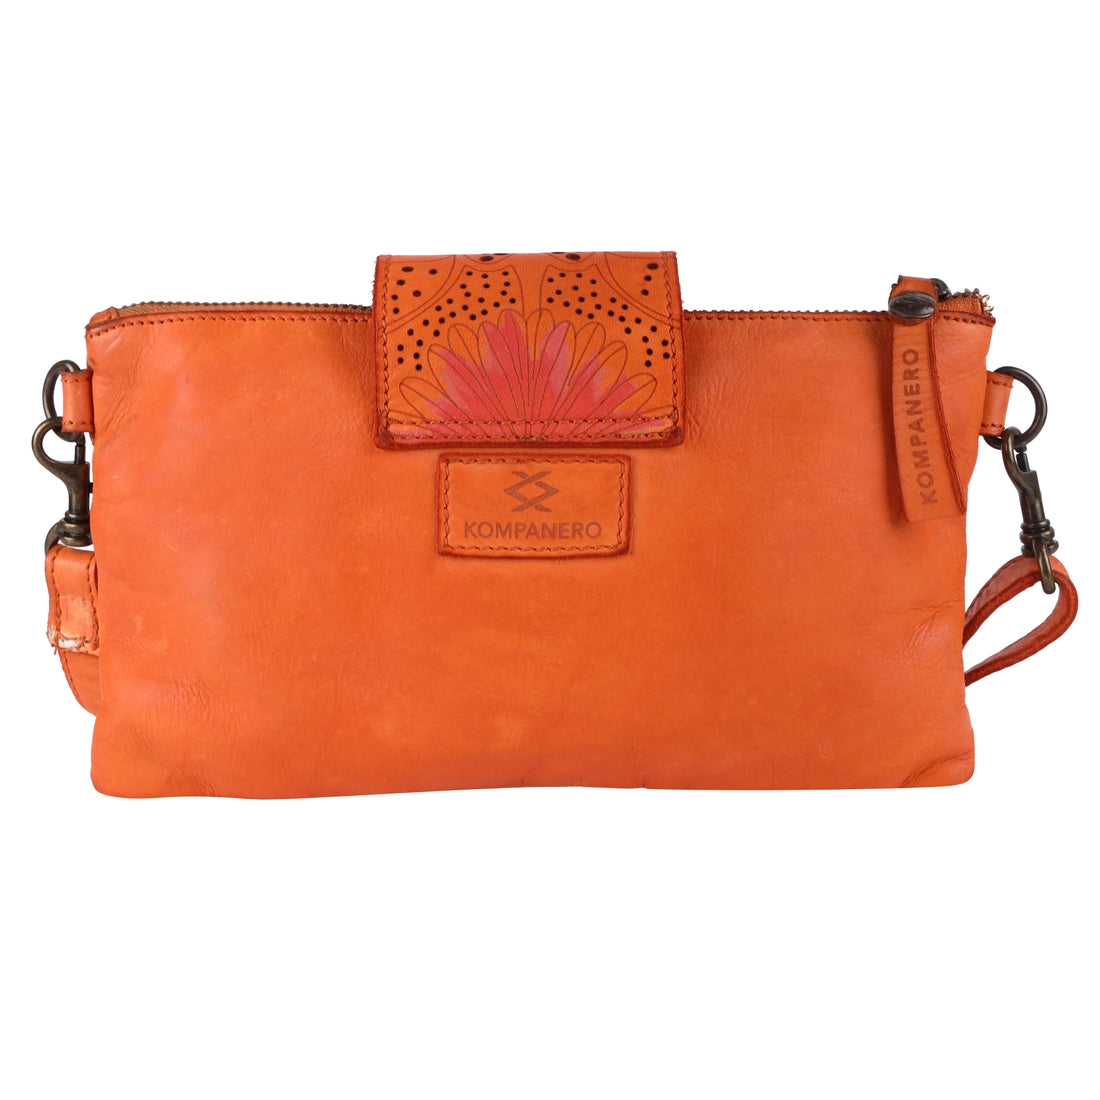 Genuine Leather Daisy Fold Secure Handbag w/ Sling - Marion - Orange Back